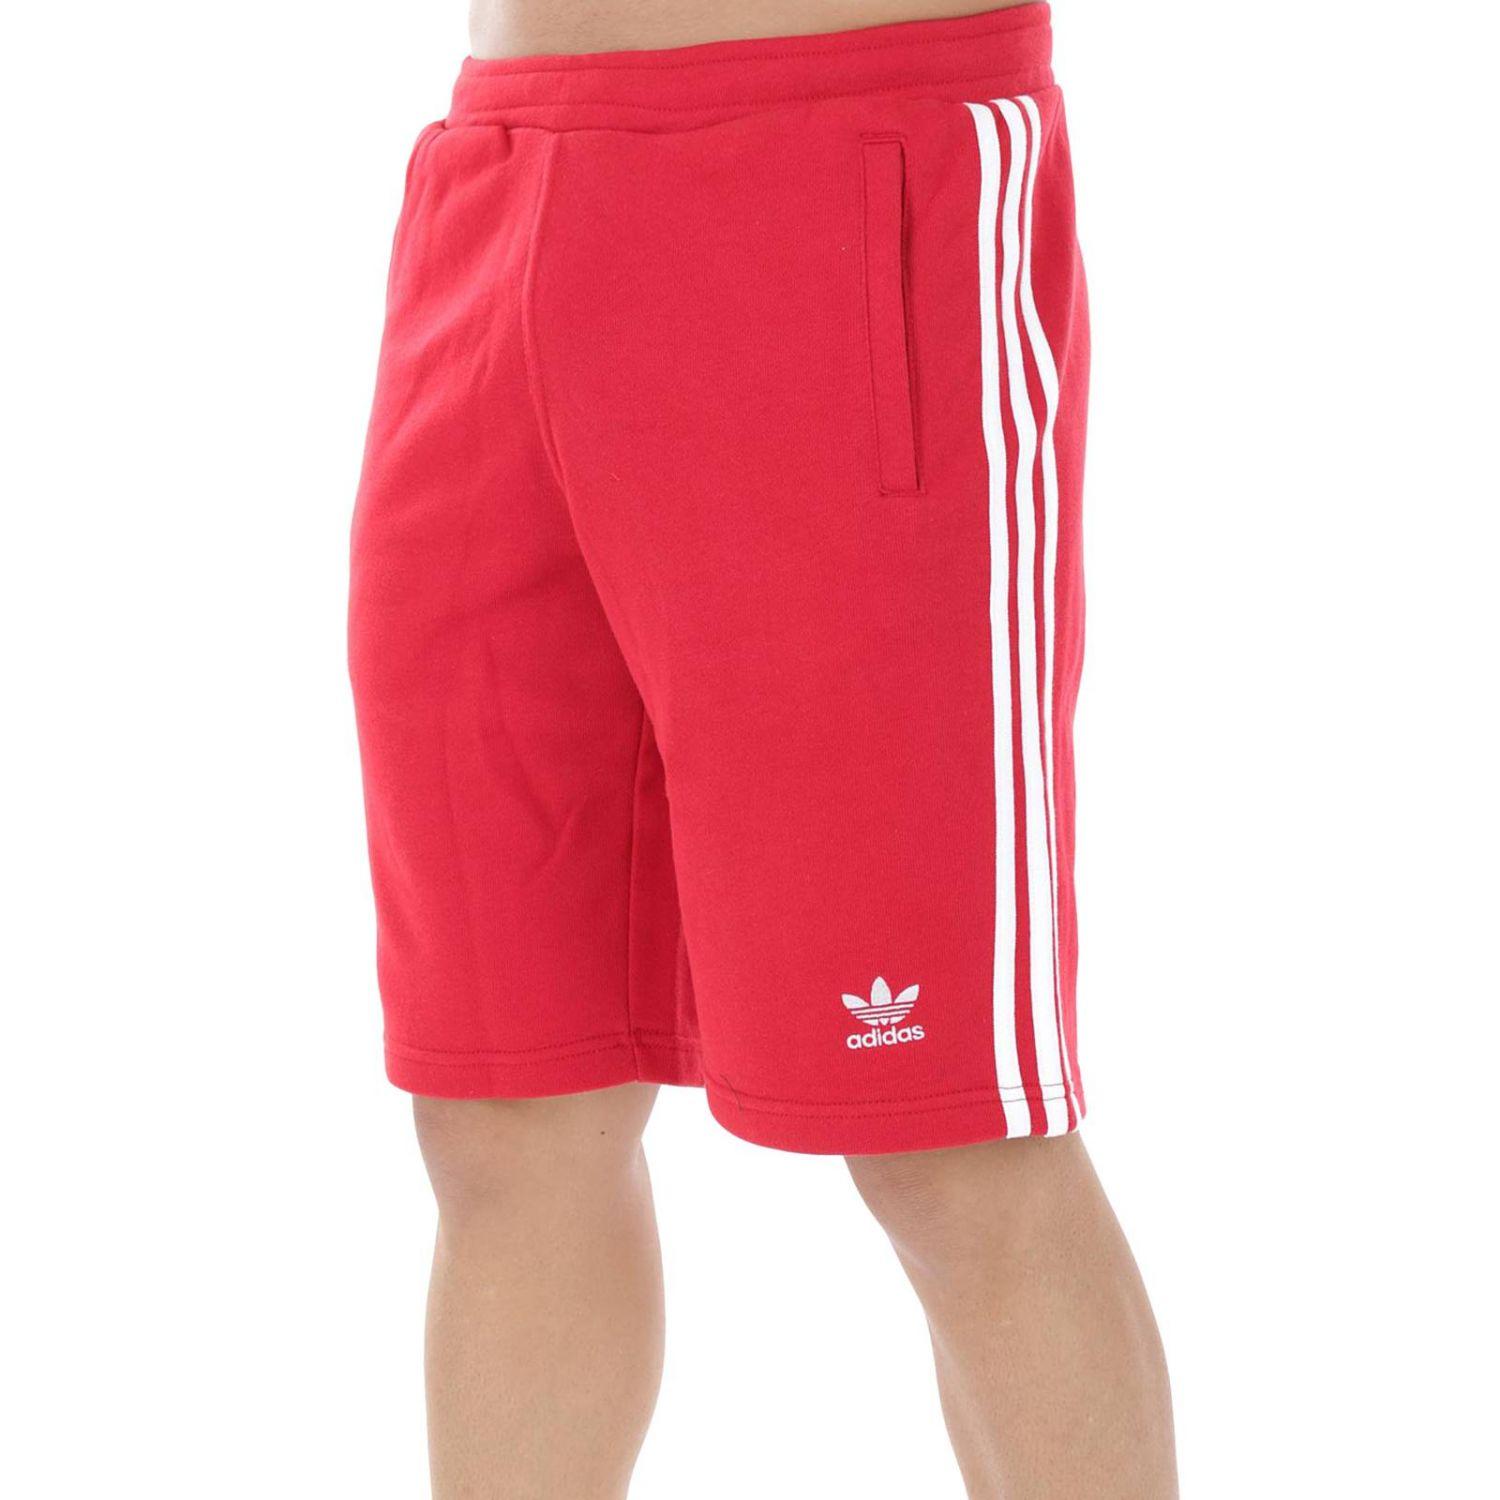 adidas shorts men red